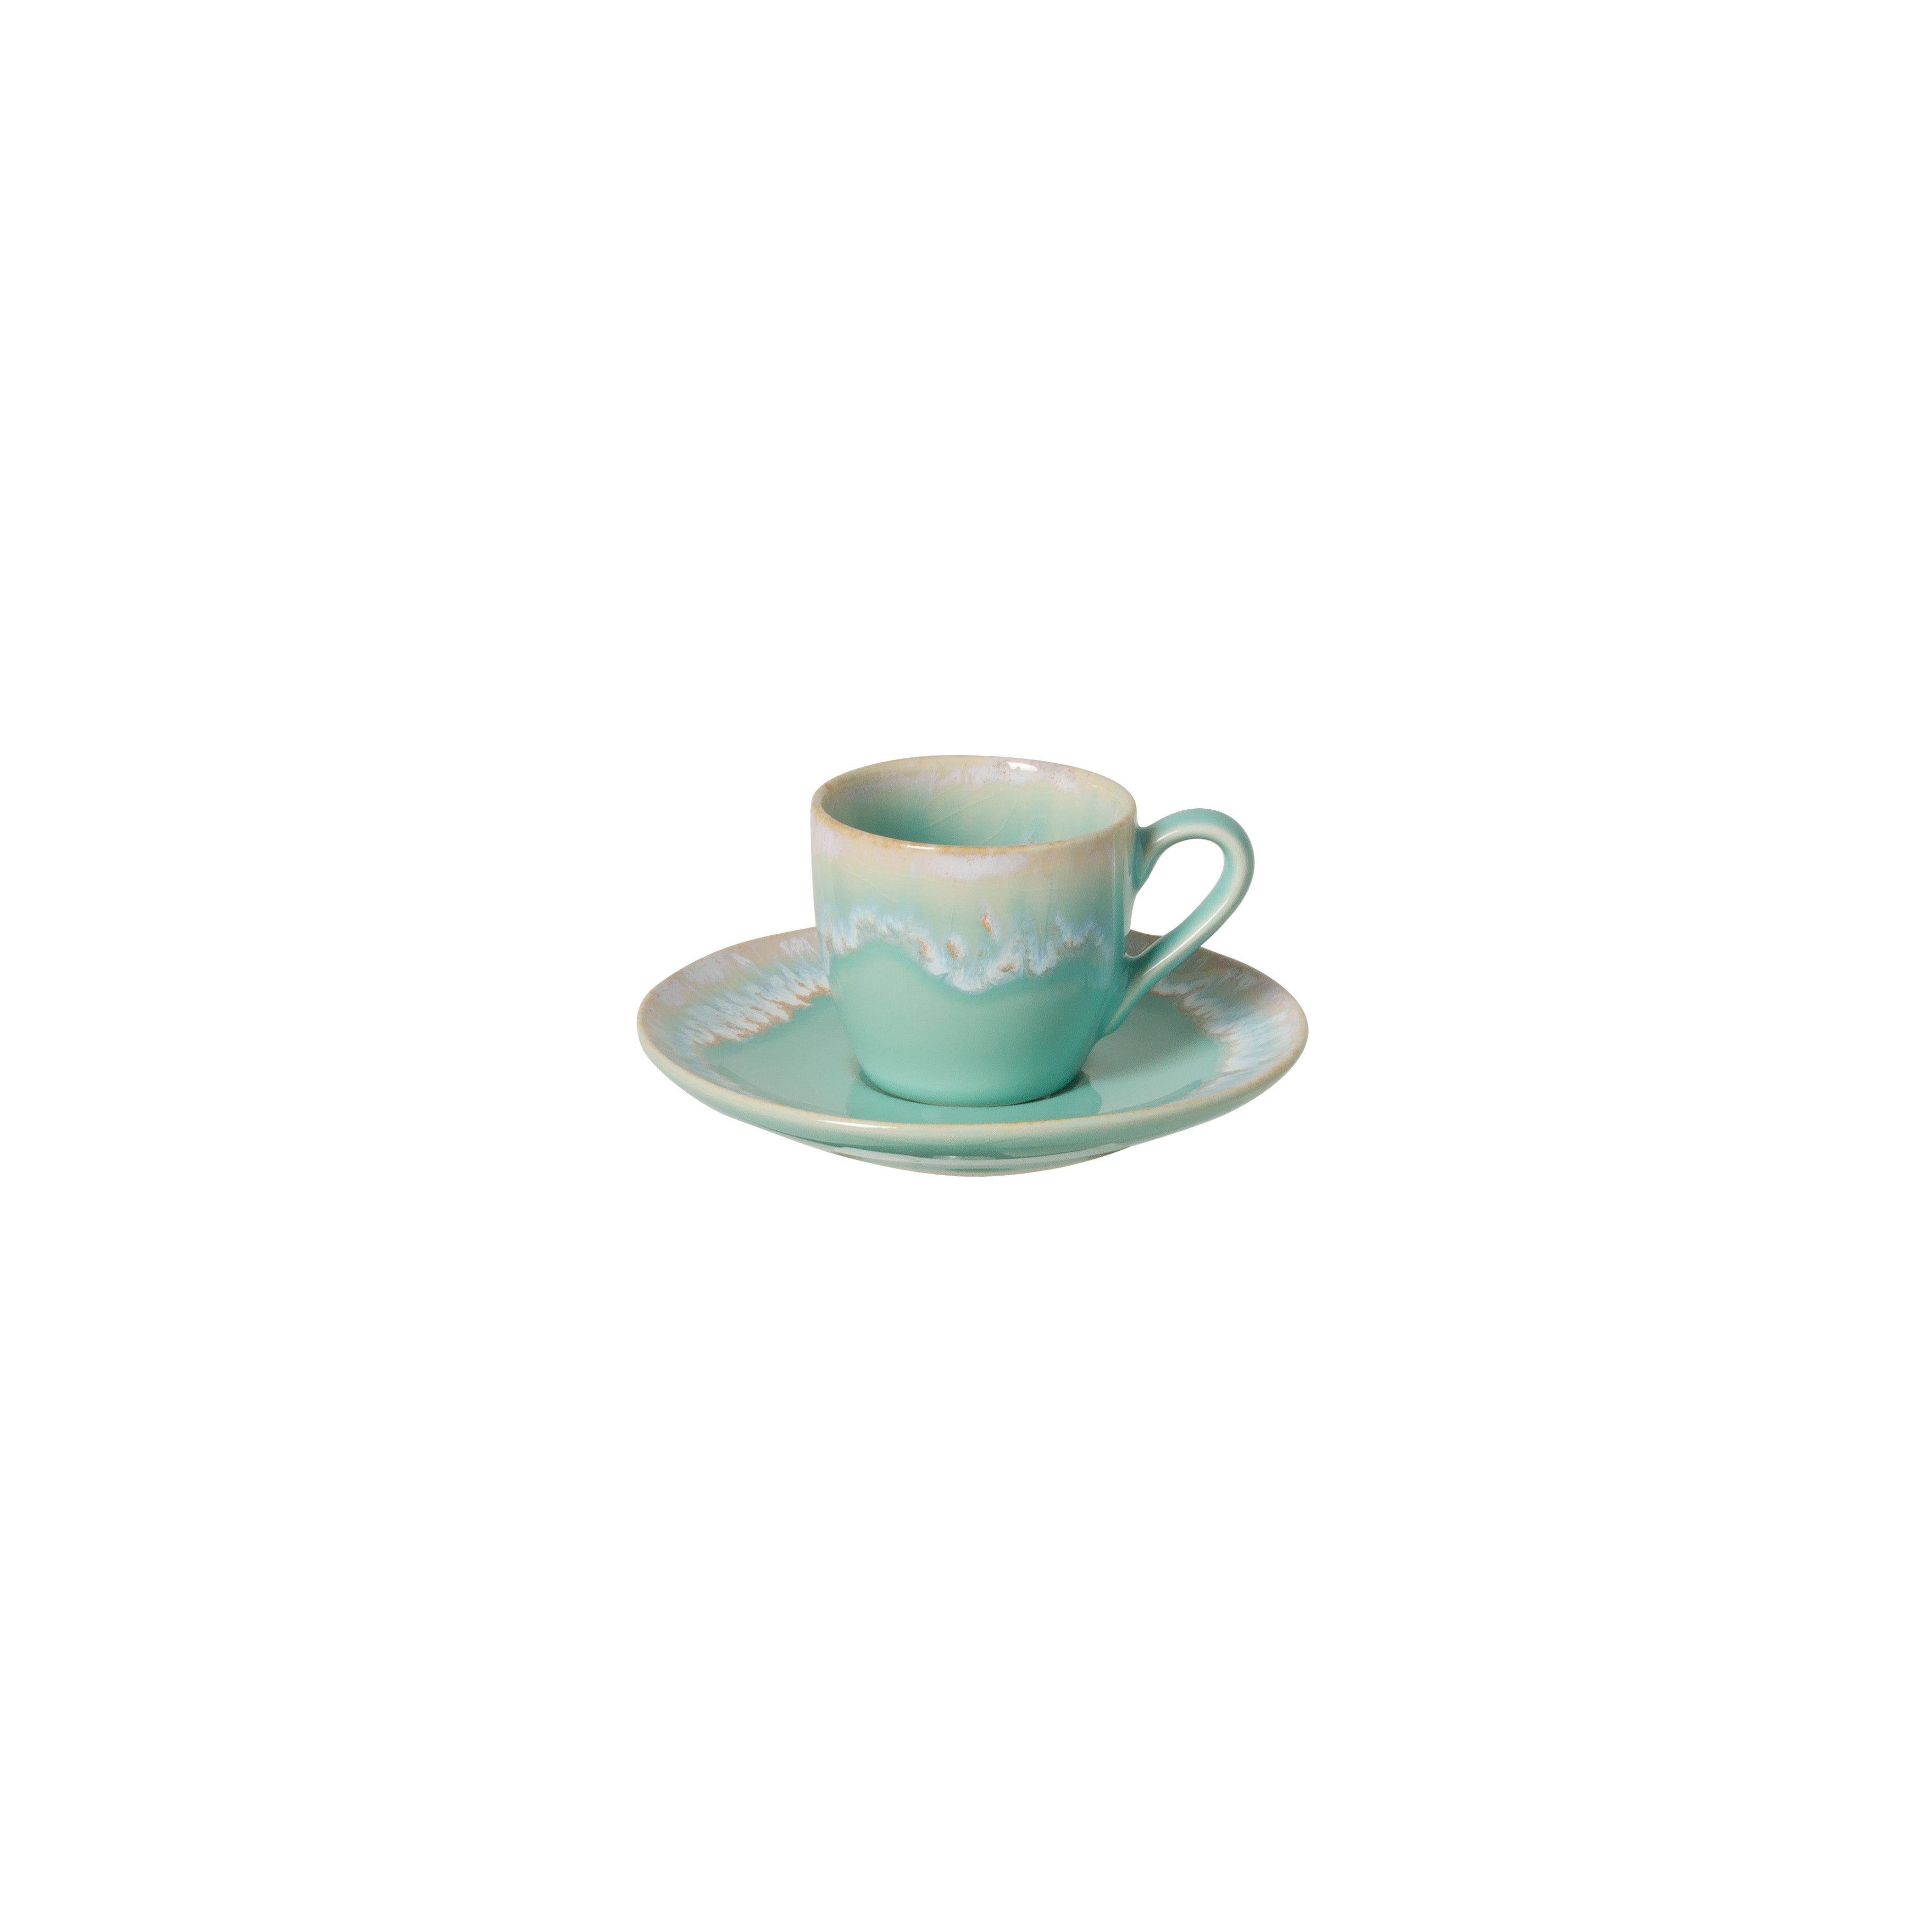 Taormina Coffee Cup and Saucer 3 oz. Aqua